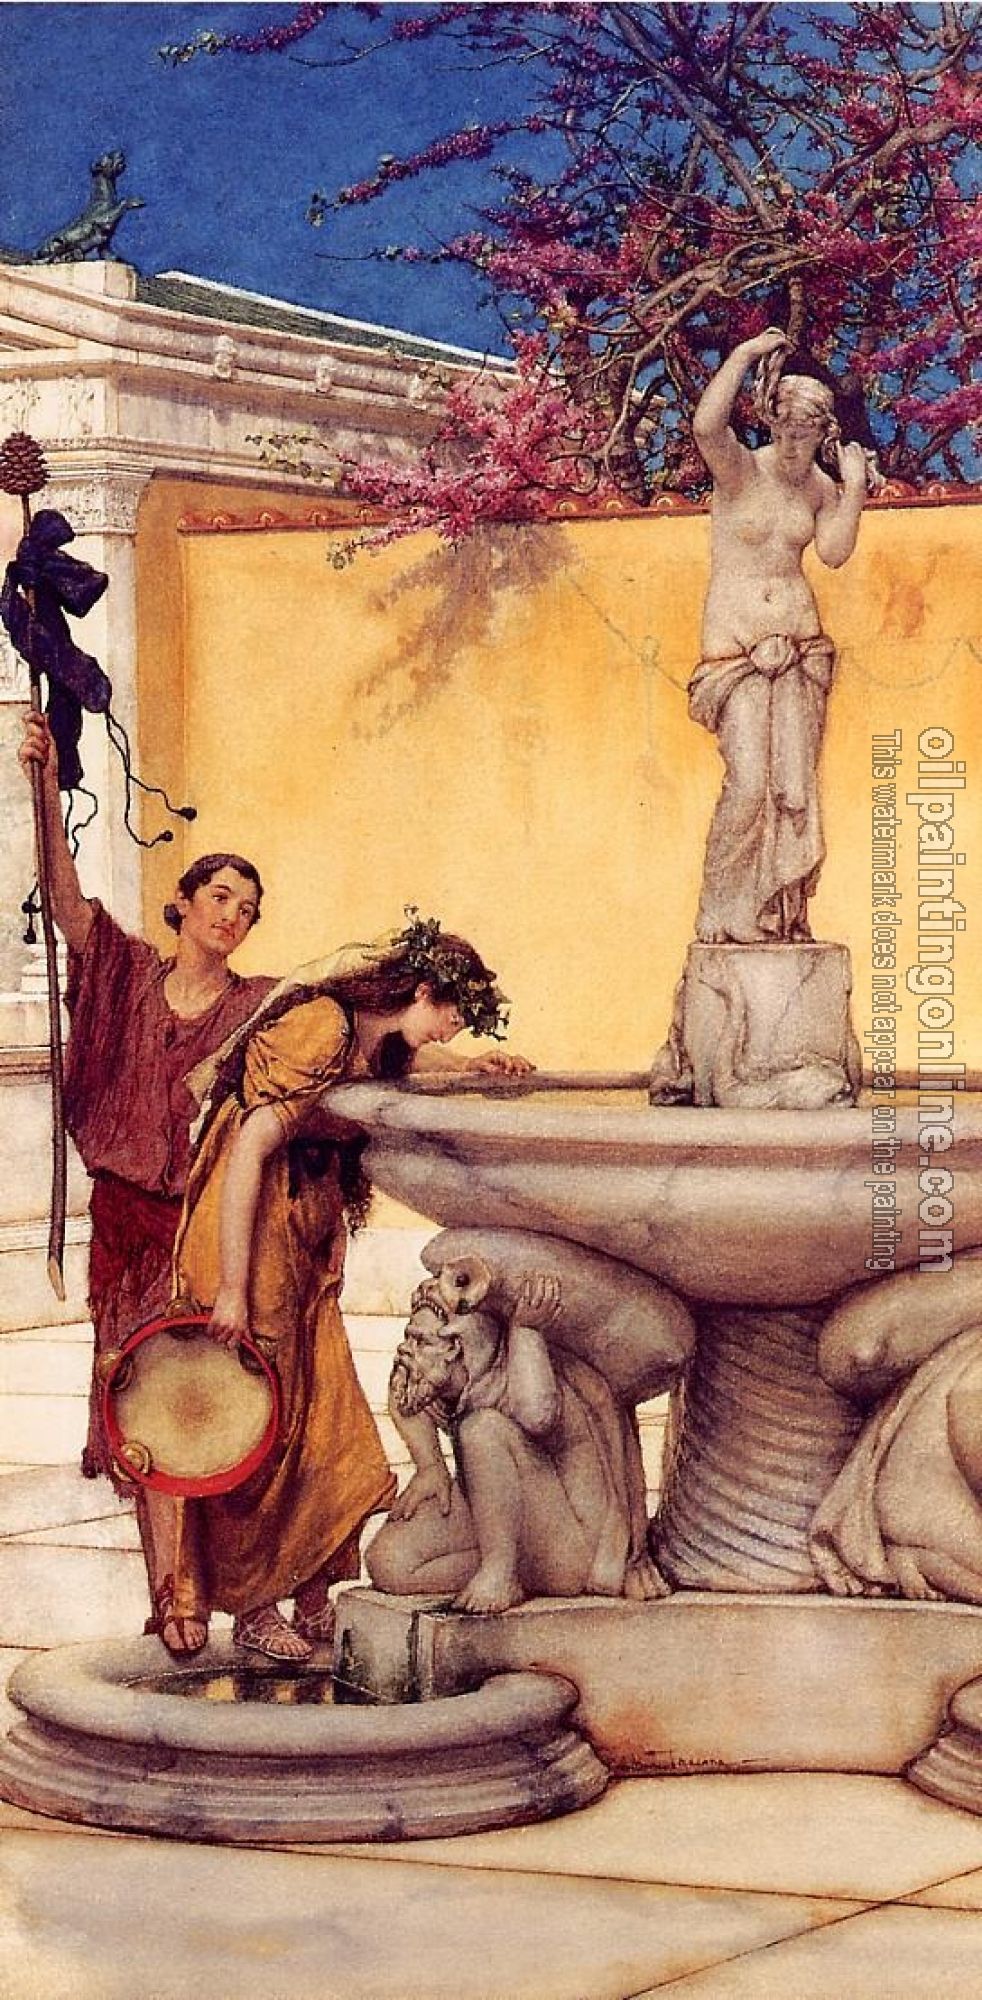 Alma-Tadema, Sir Lawrence - Between Venus and Bacchus